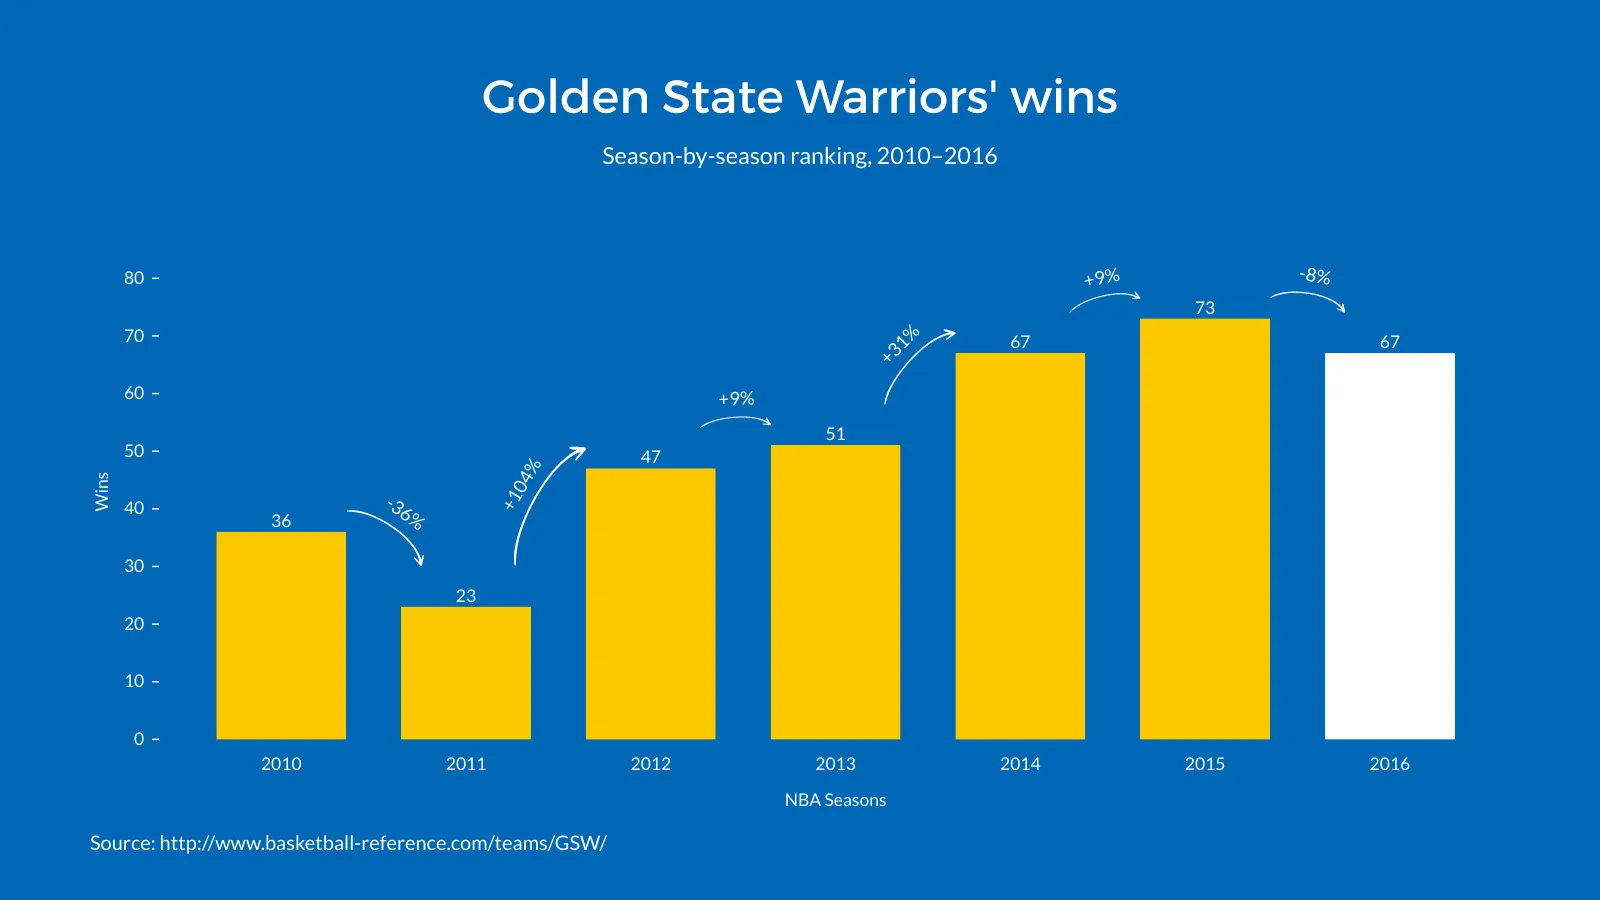 Growth Bar Chart example: Golden State Warriors' wins